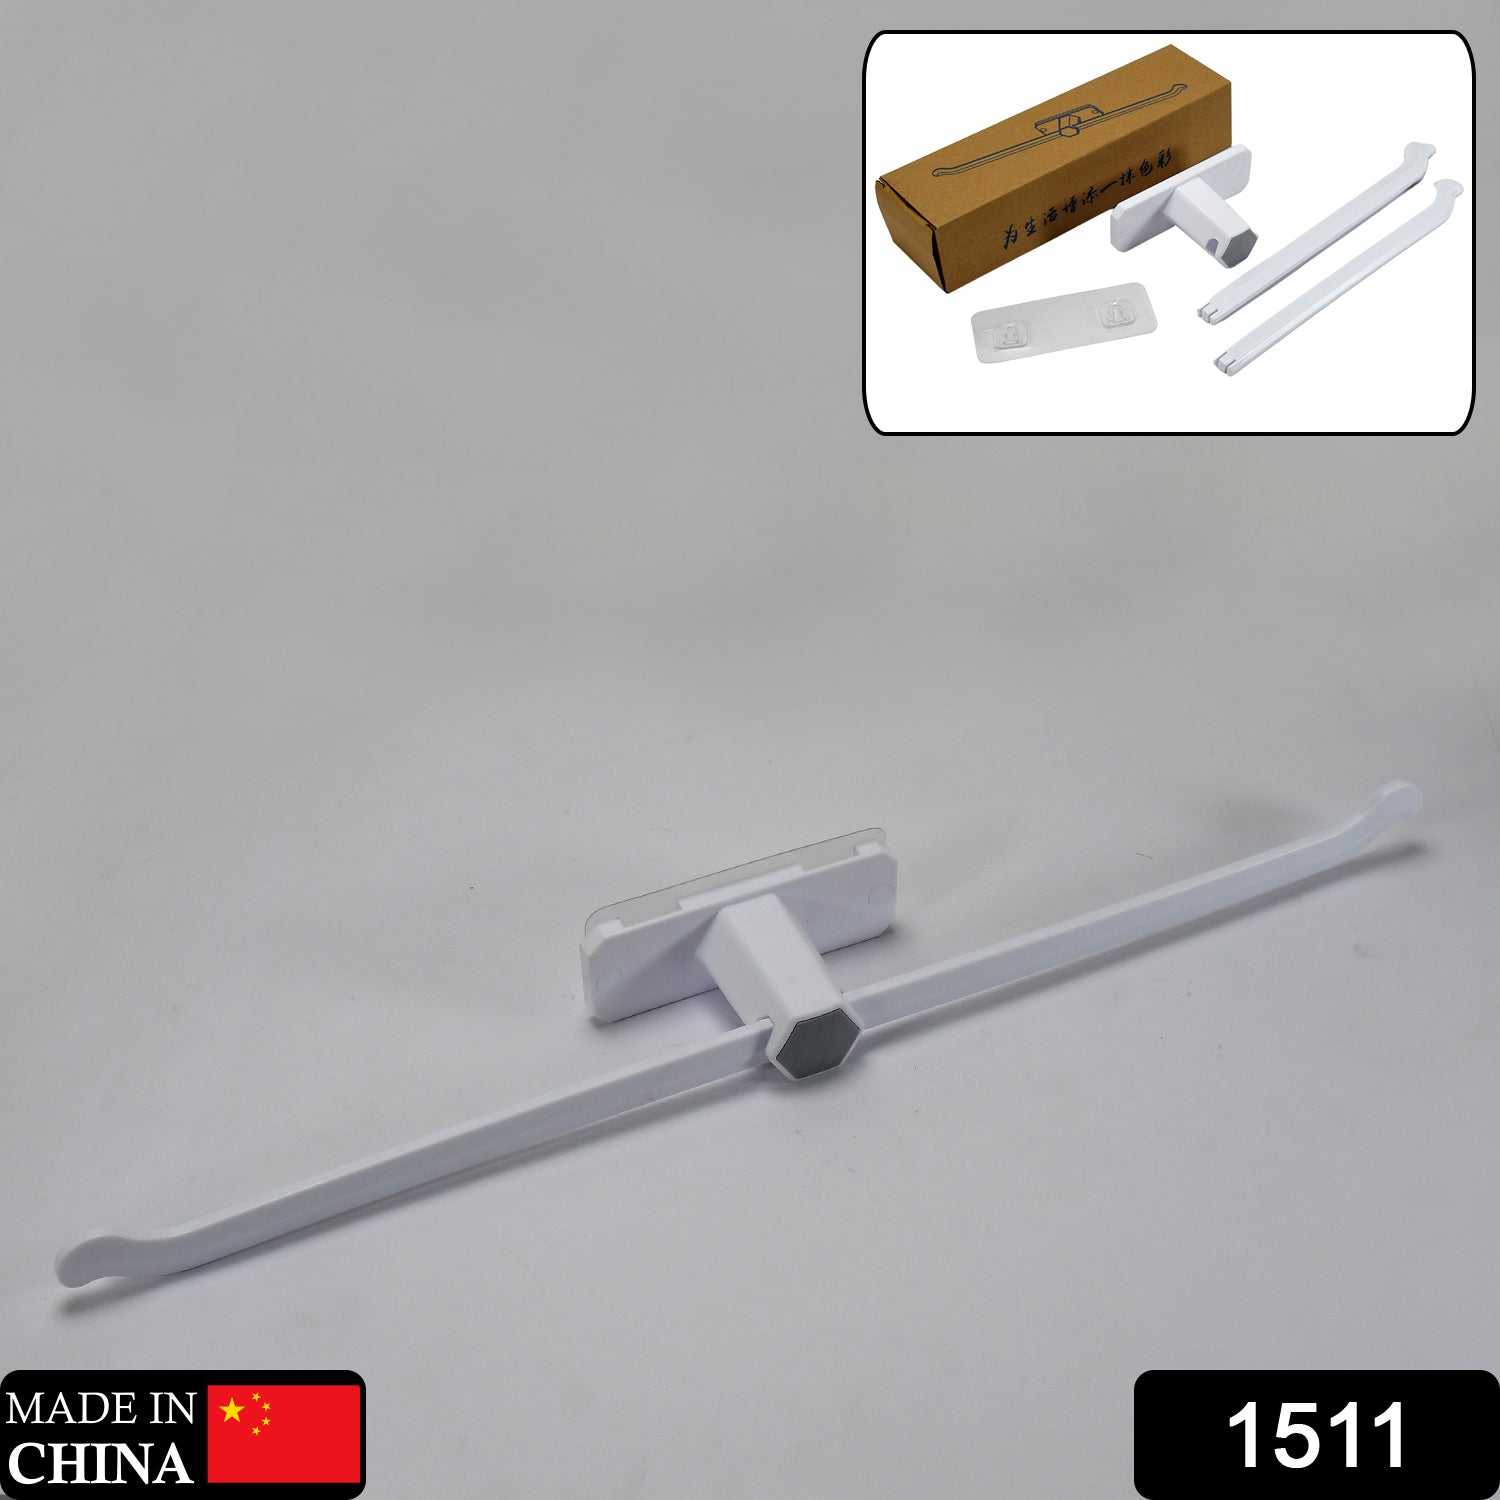 1511 Plastic Hanger Towel Hanger/Holder for Bathroom Self Adhesive Towel Stand/Rack Bathroom Accessories DeoDap